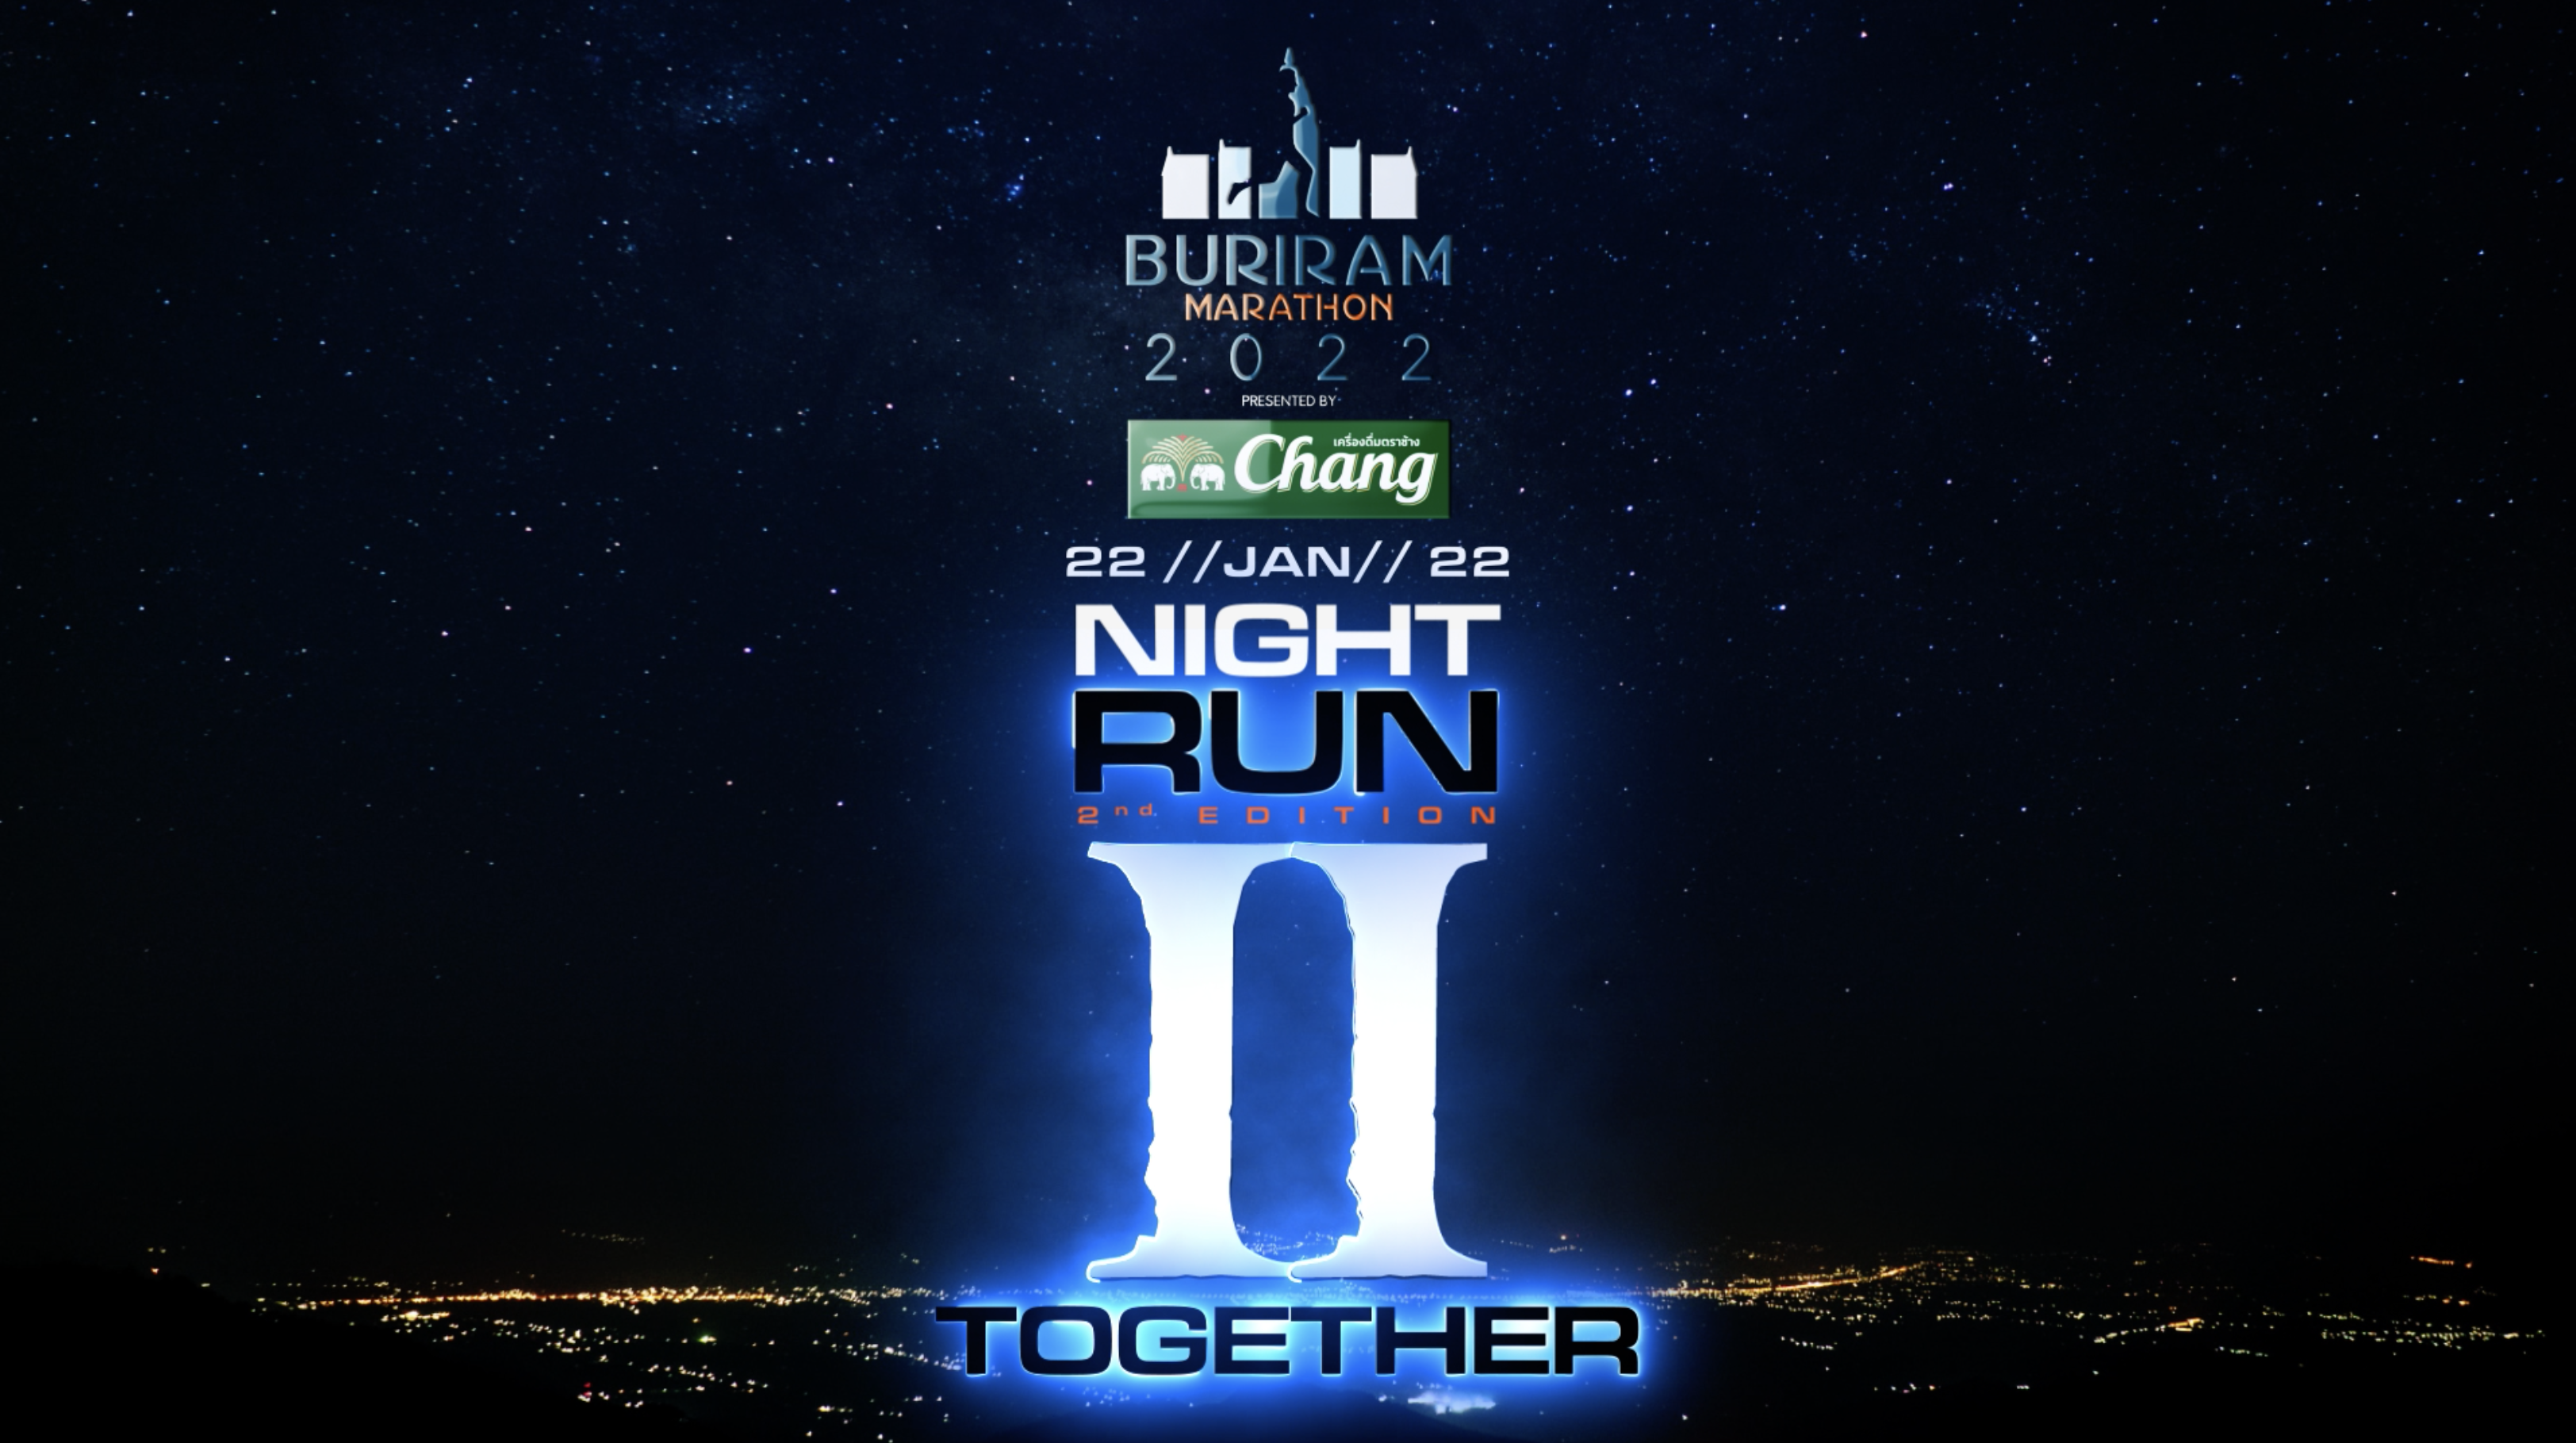 Buriram Marathon 2022 Night Run 2nd Edition Run Together